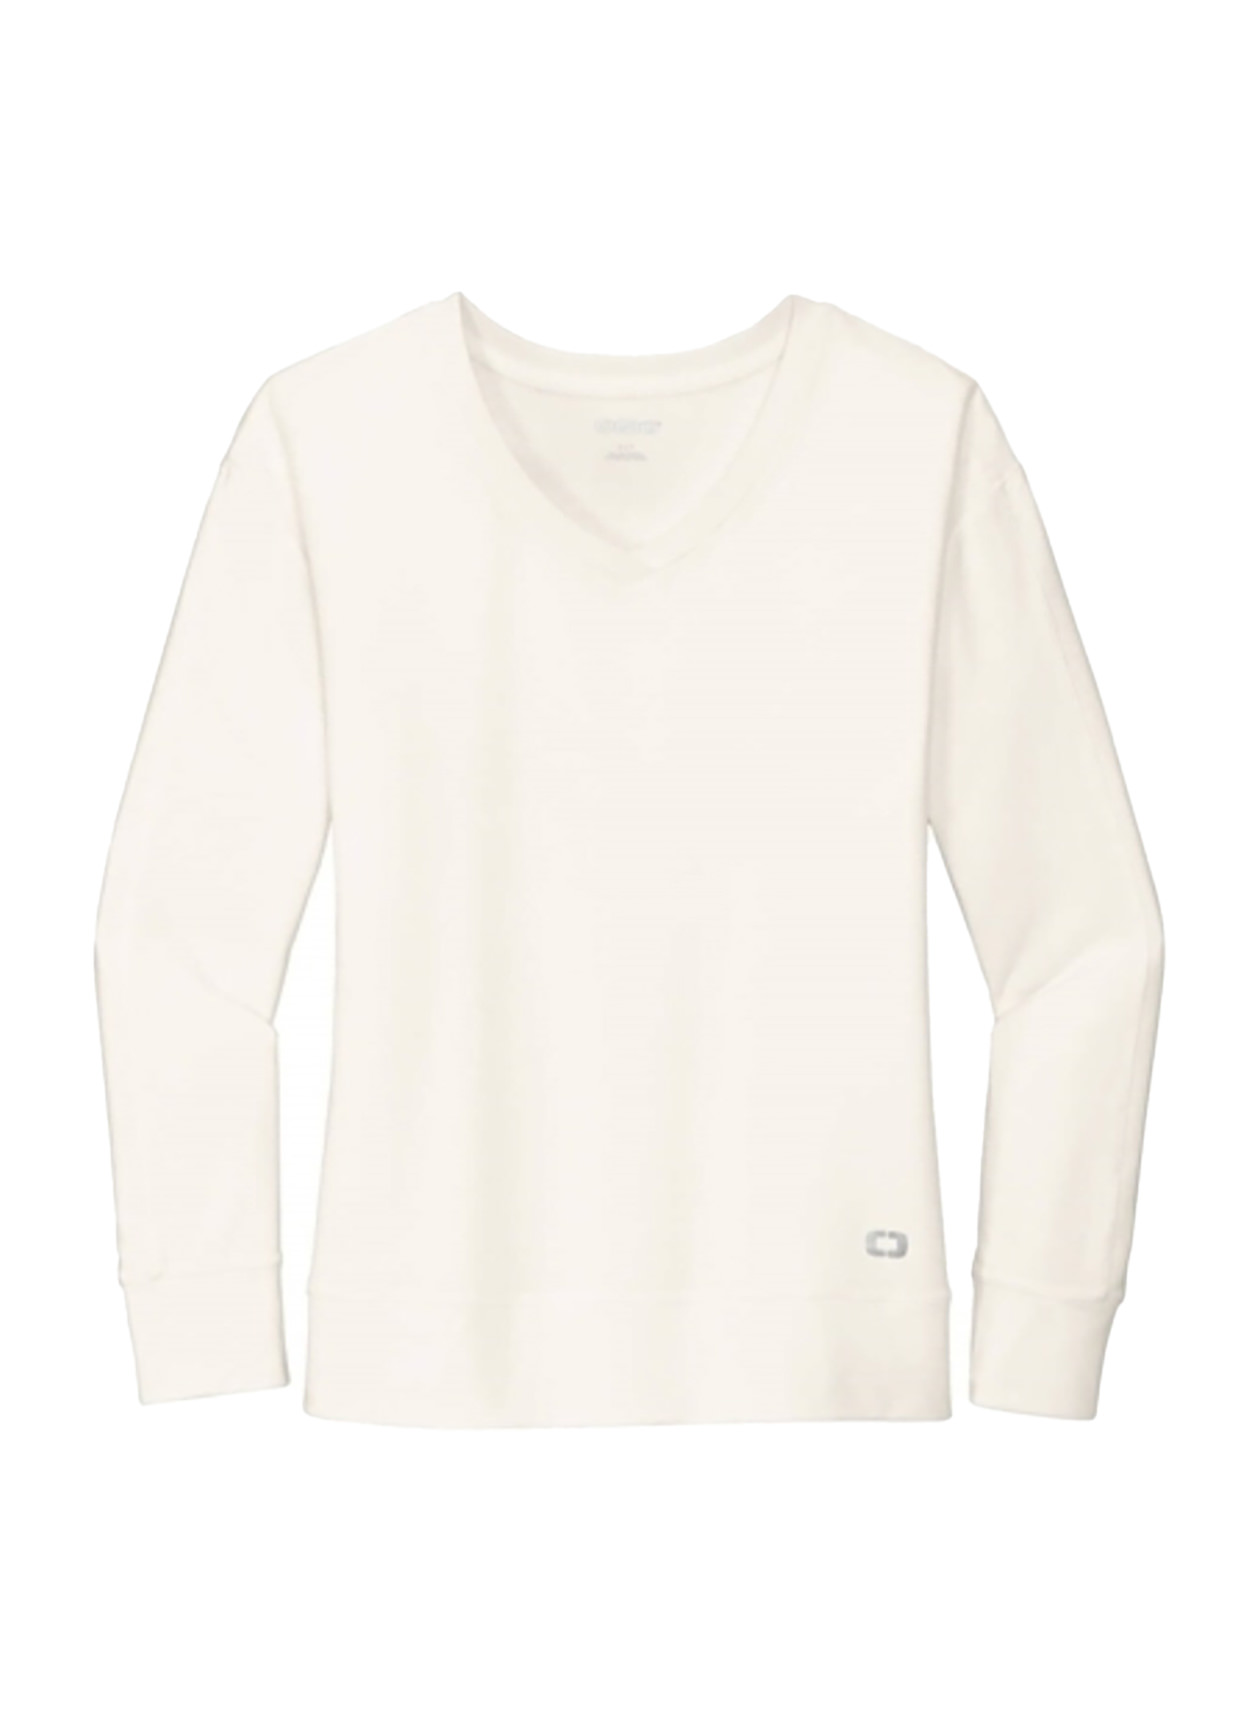 OGIO Women's Ivory Snow Luuma Flex V-Neck Sweatshirt